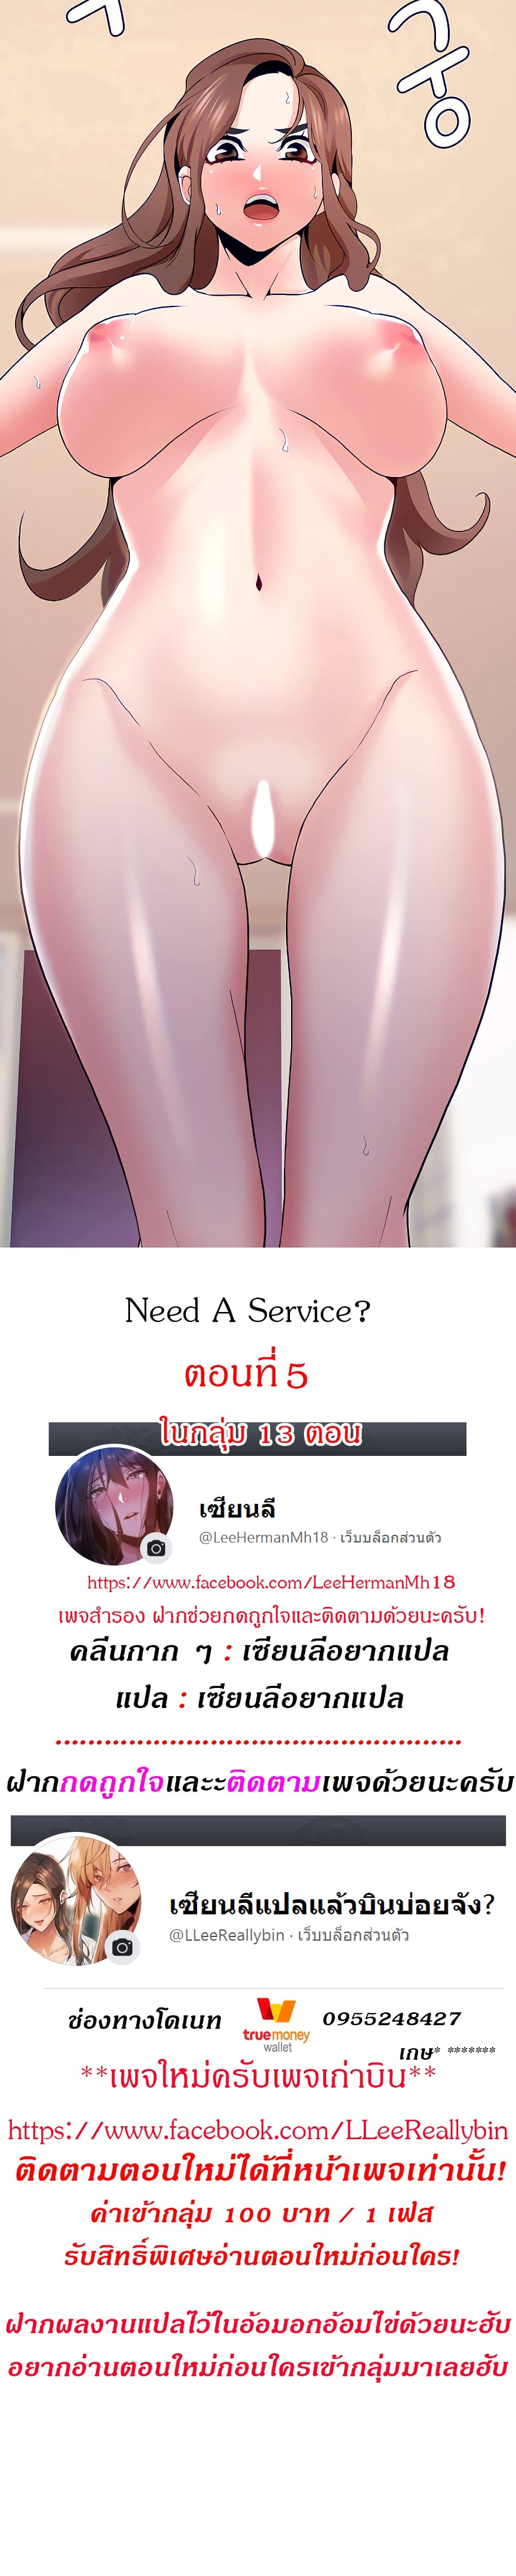 Need A Service 5 (1)